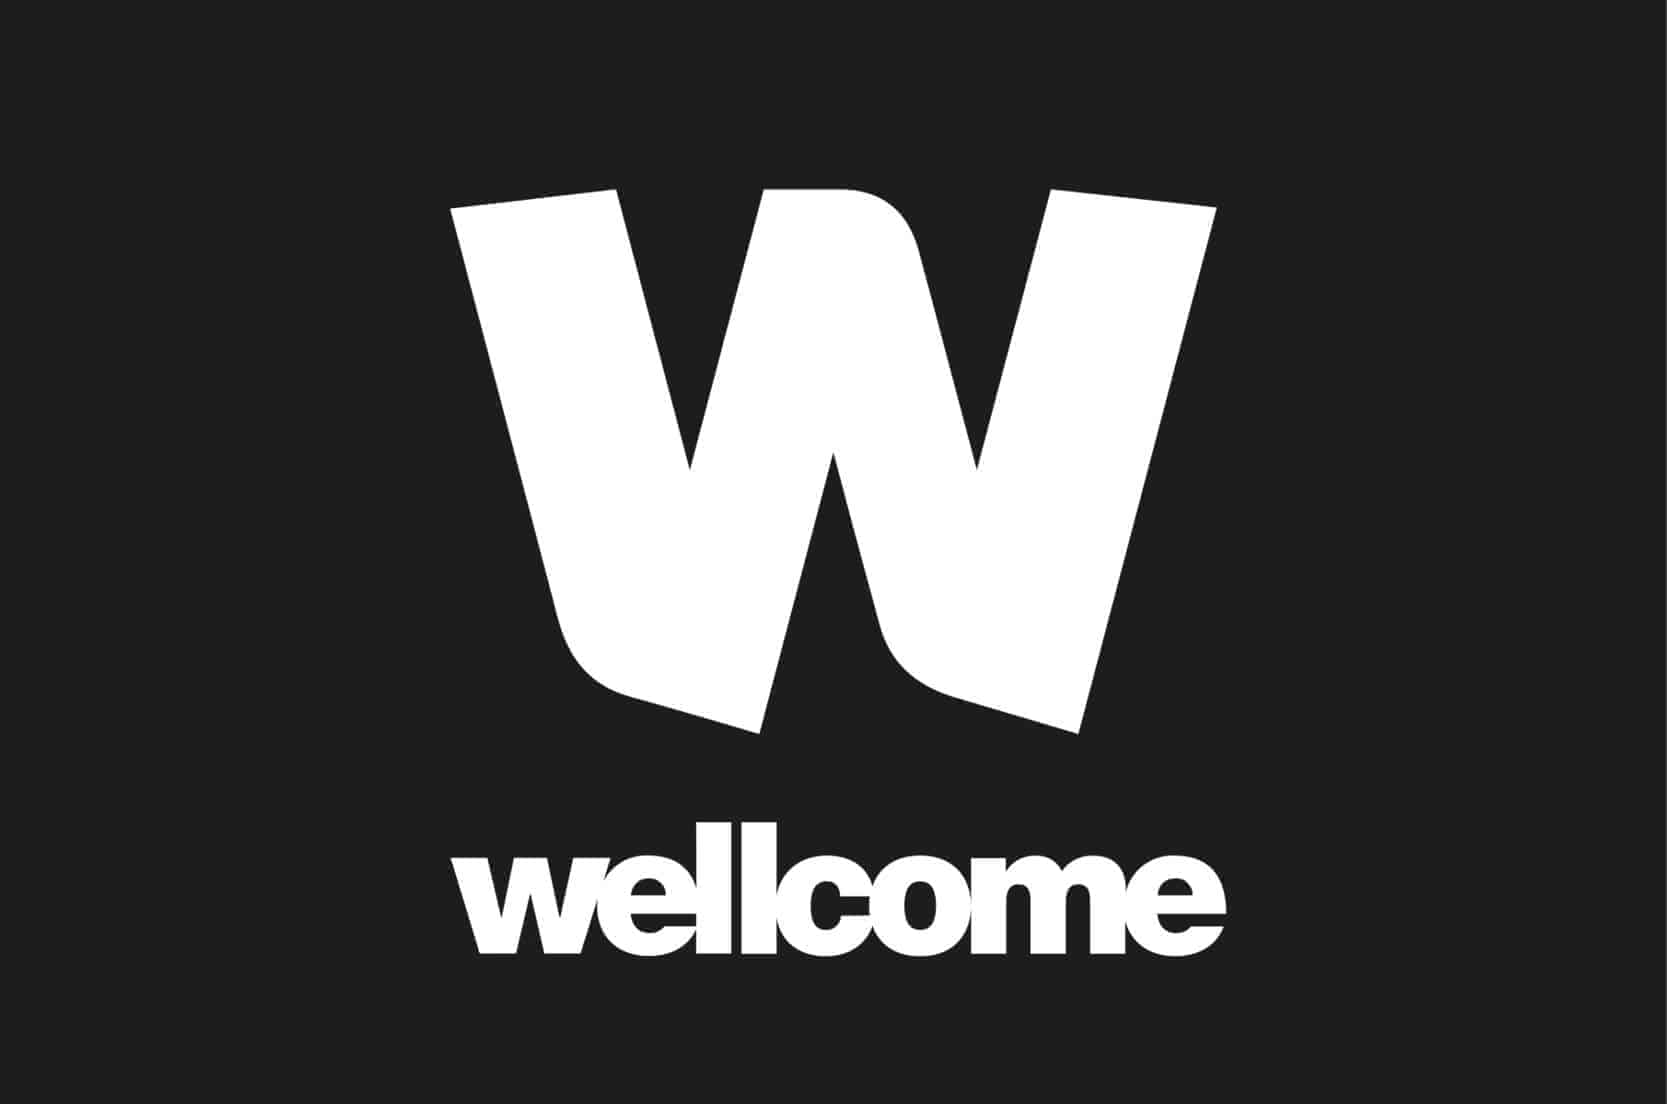 Wellcome trust logo